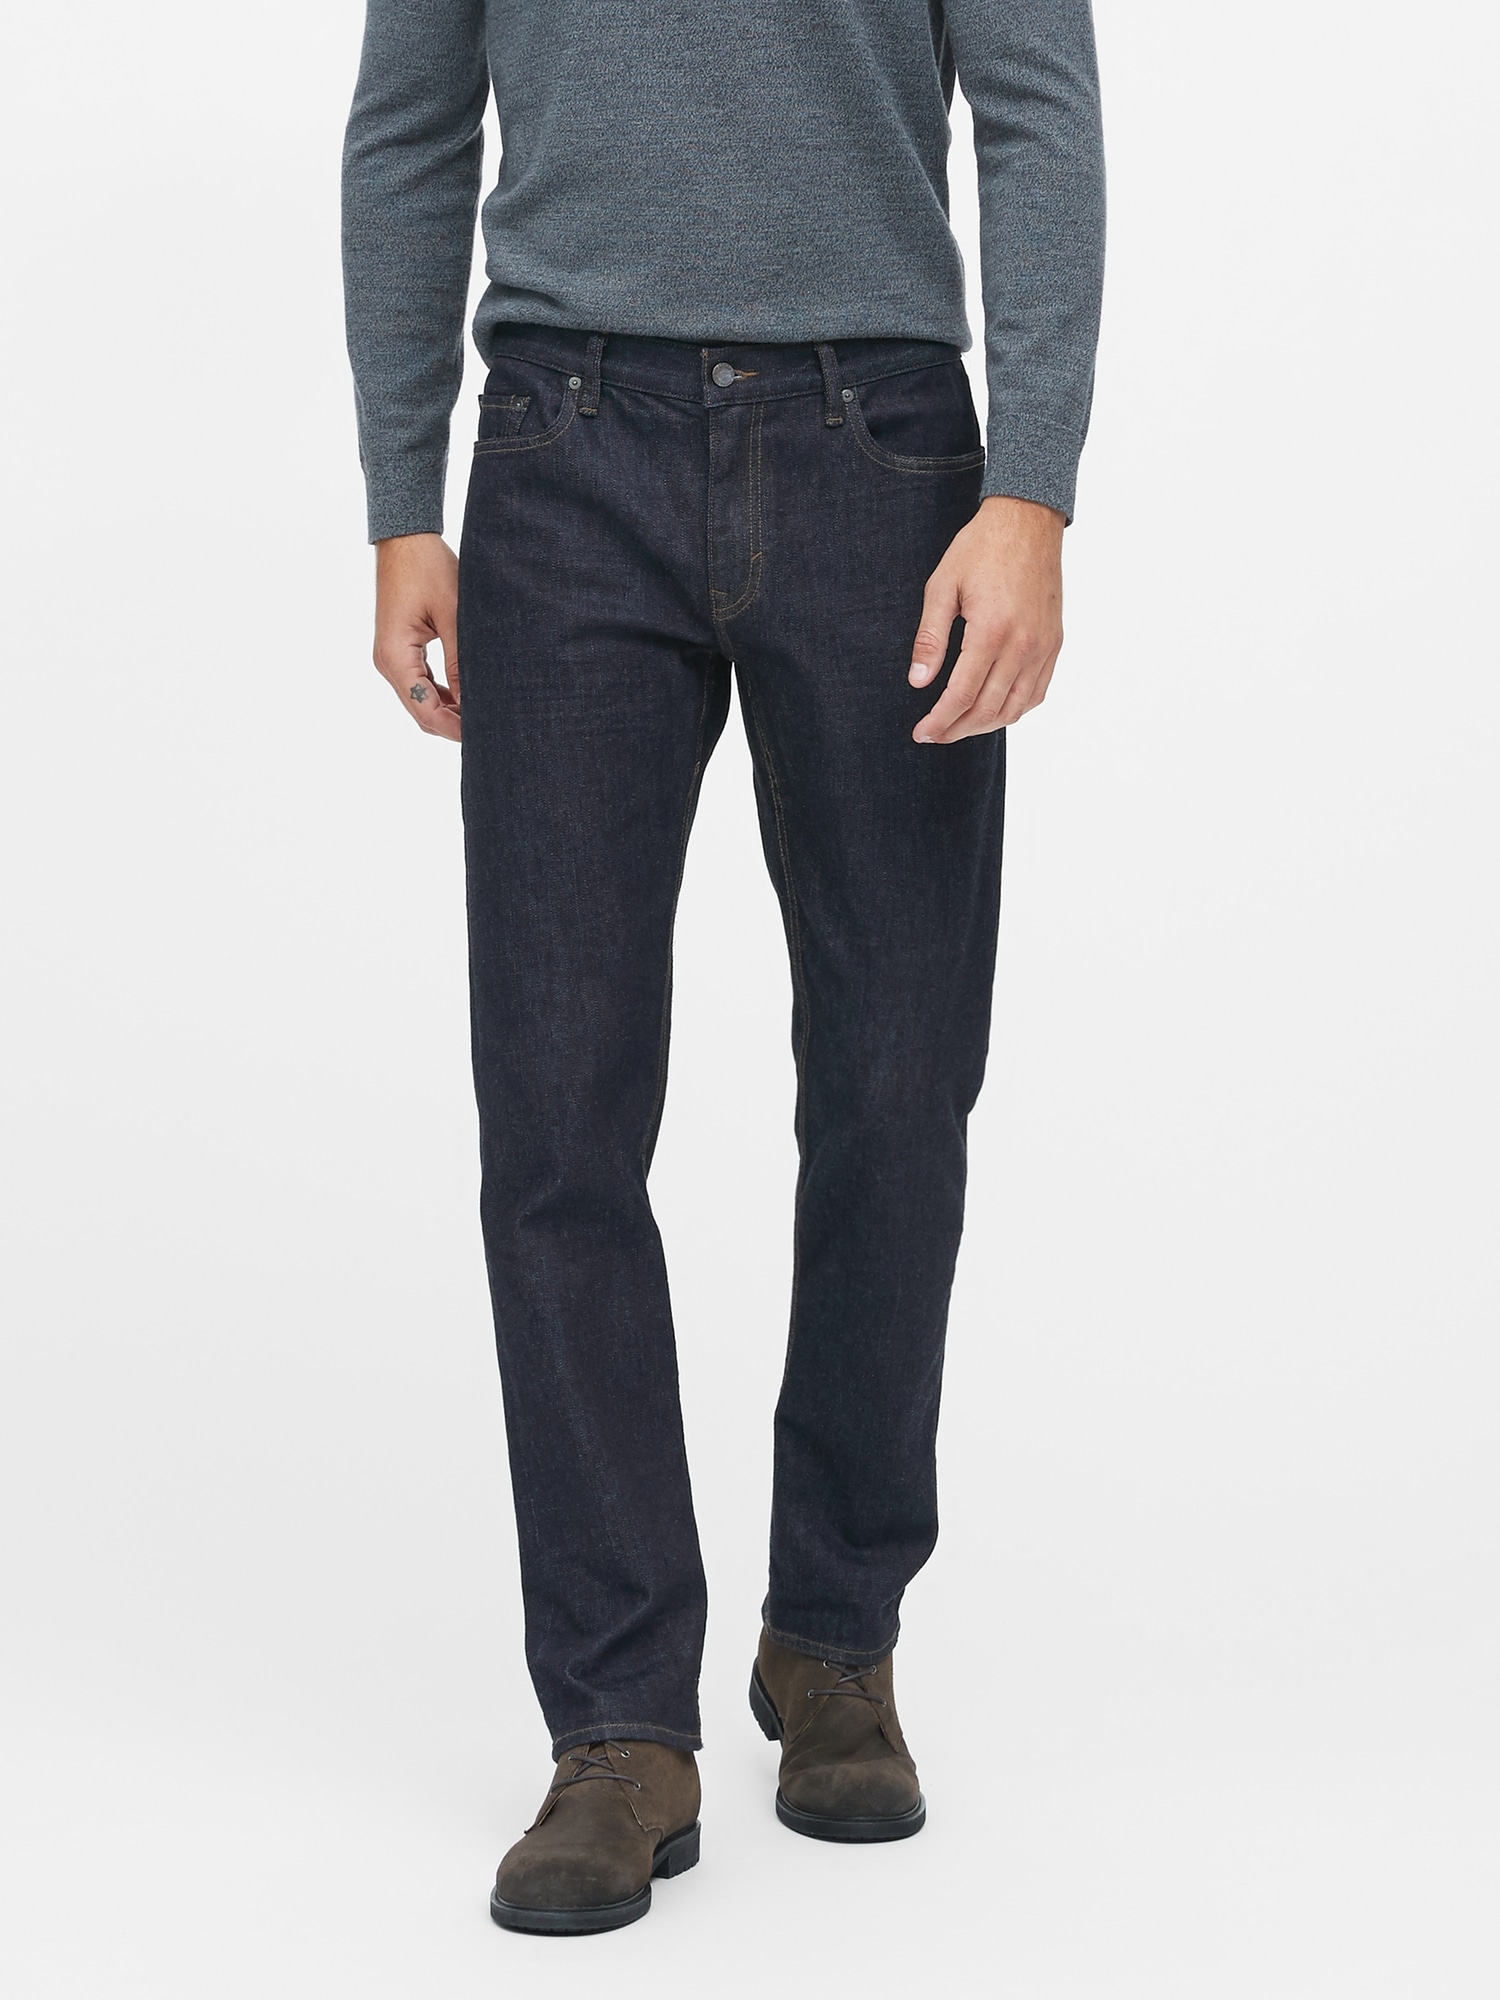 h&m grey jeans mens